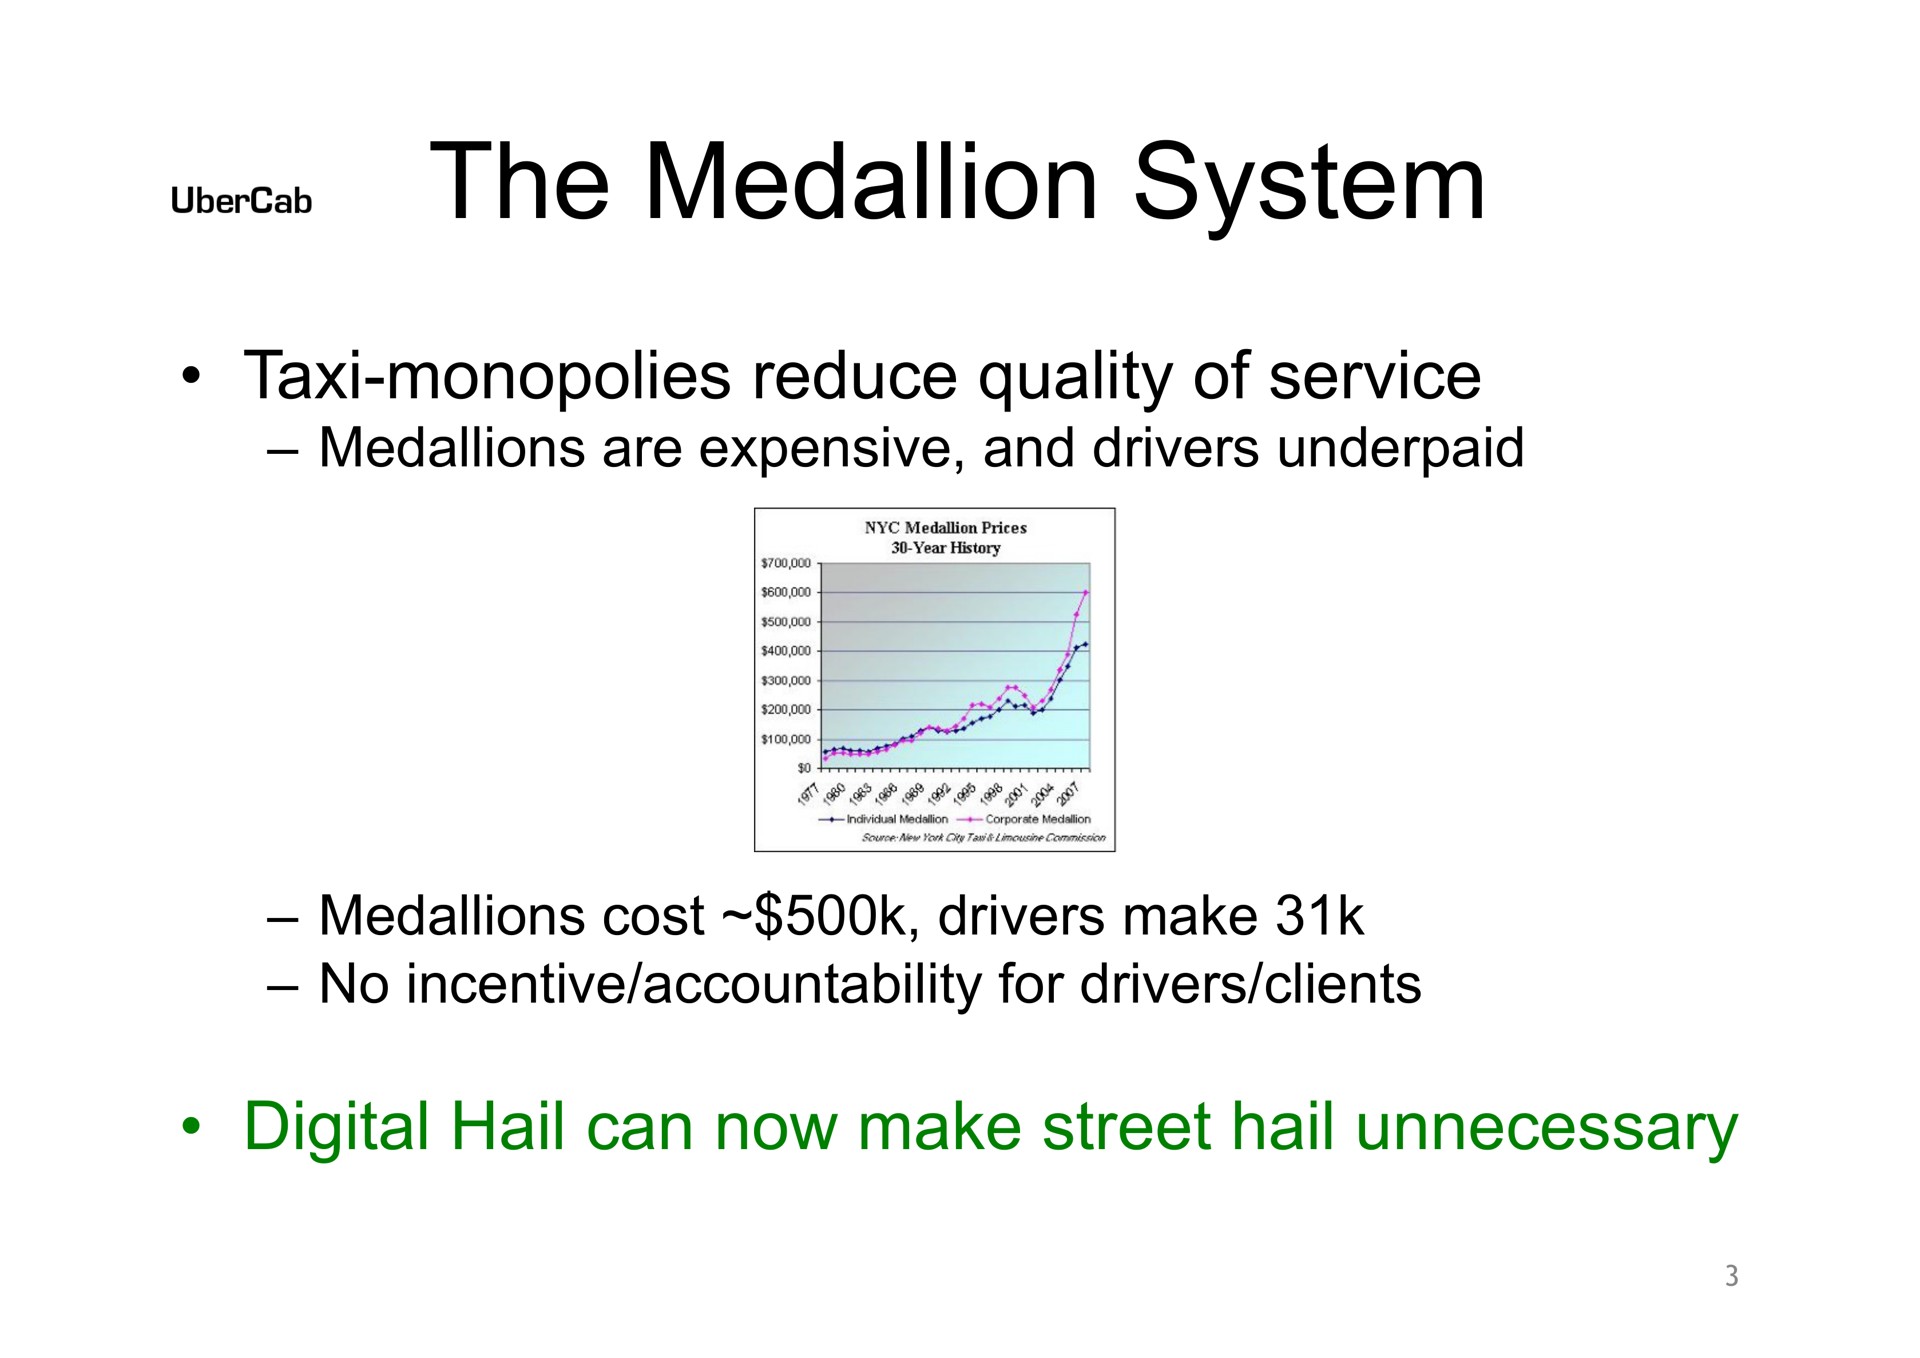 the medallion system ween | Uber